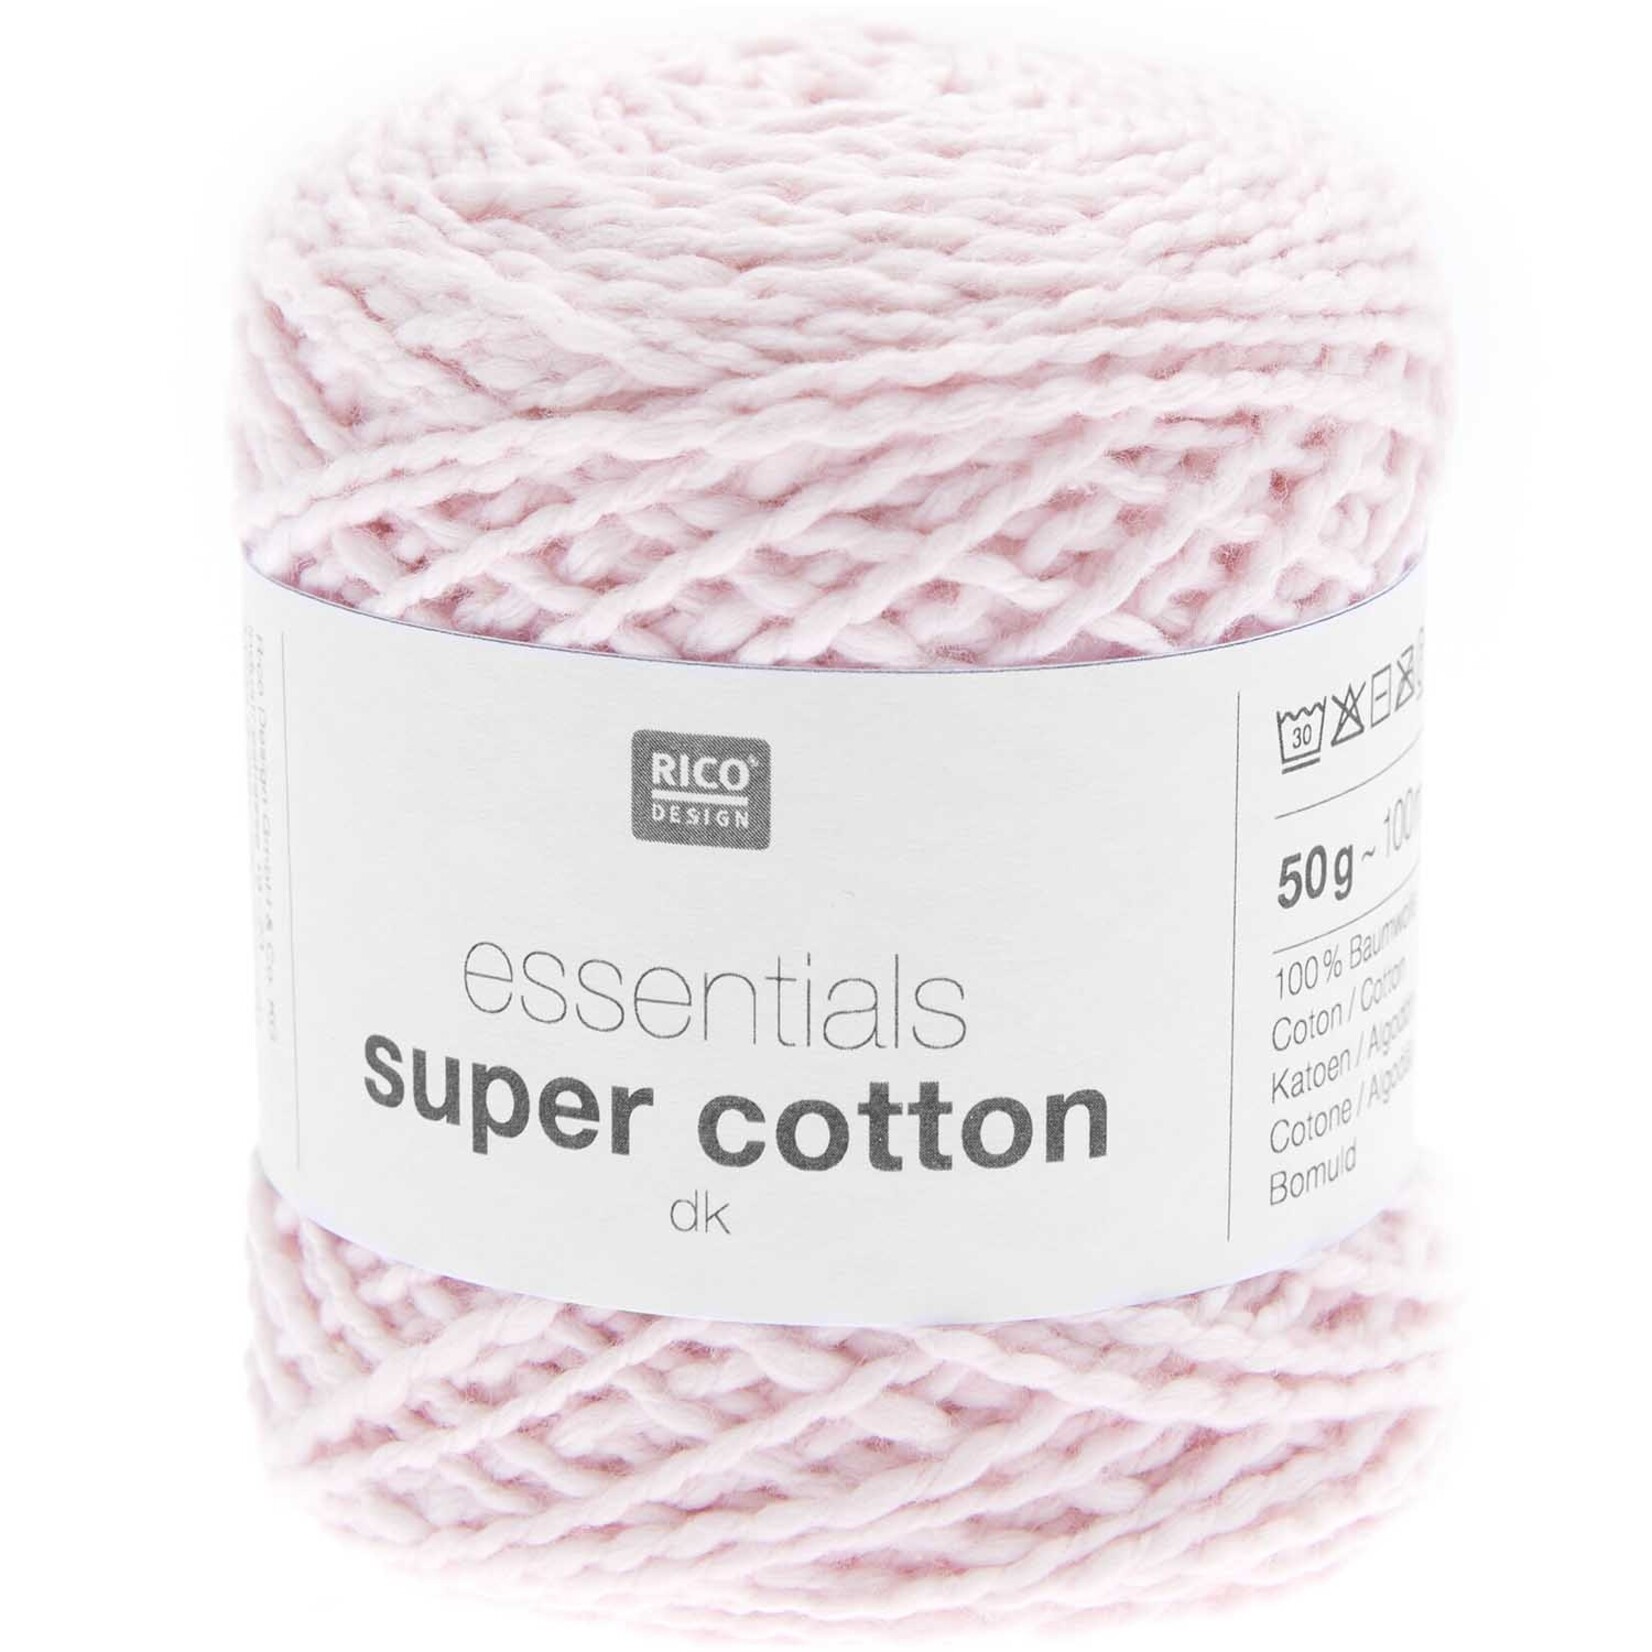 Rico Super Cotton dk 008 Pink